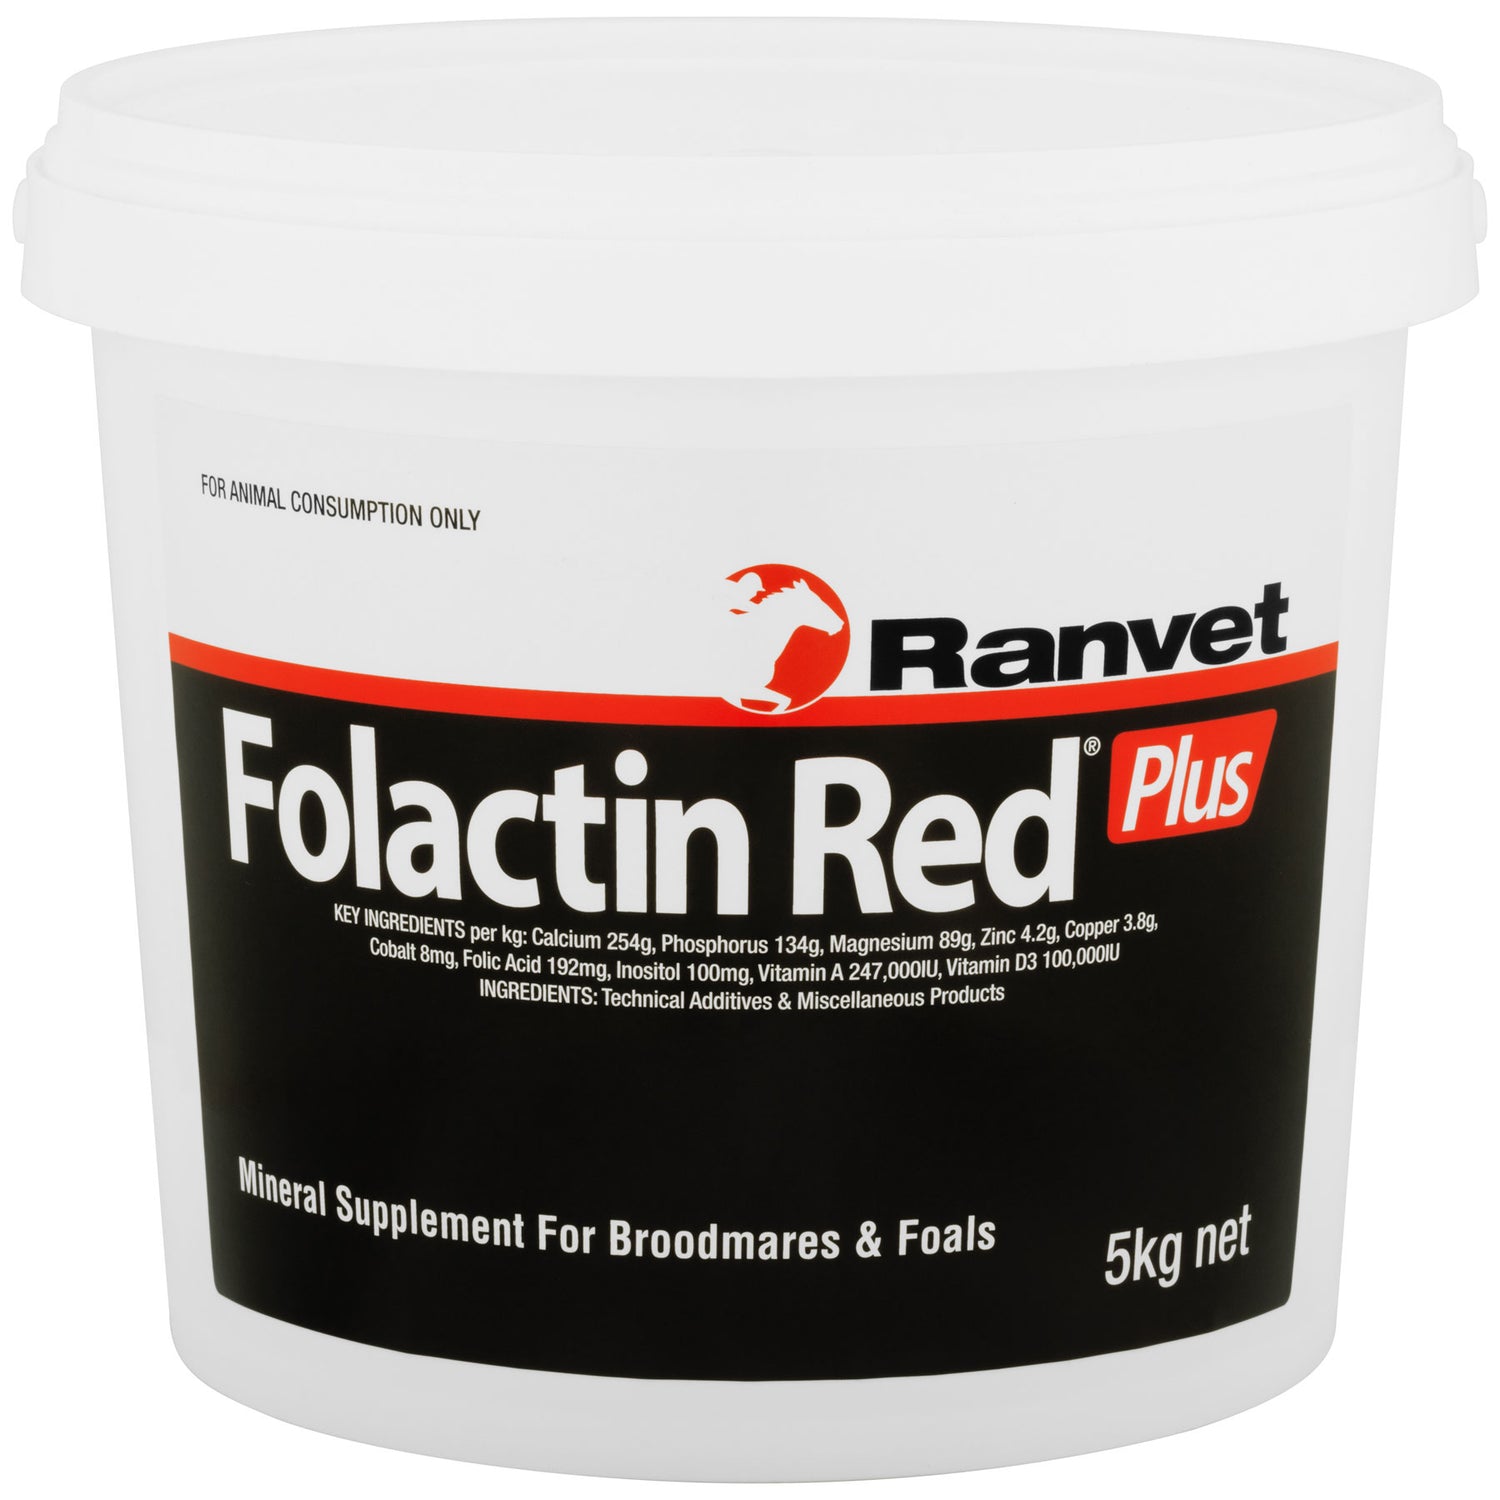 Folactin Red Plus 5kg (Ranvet)